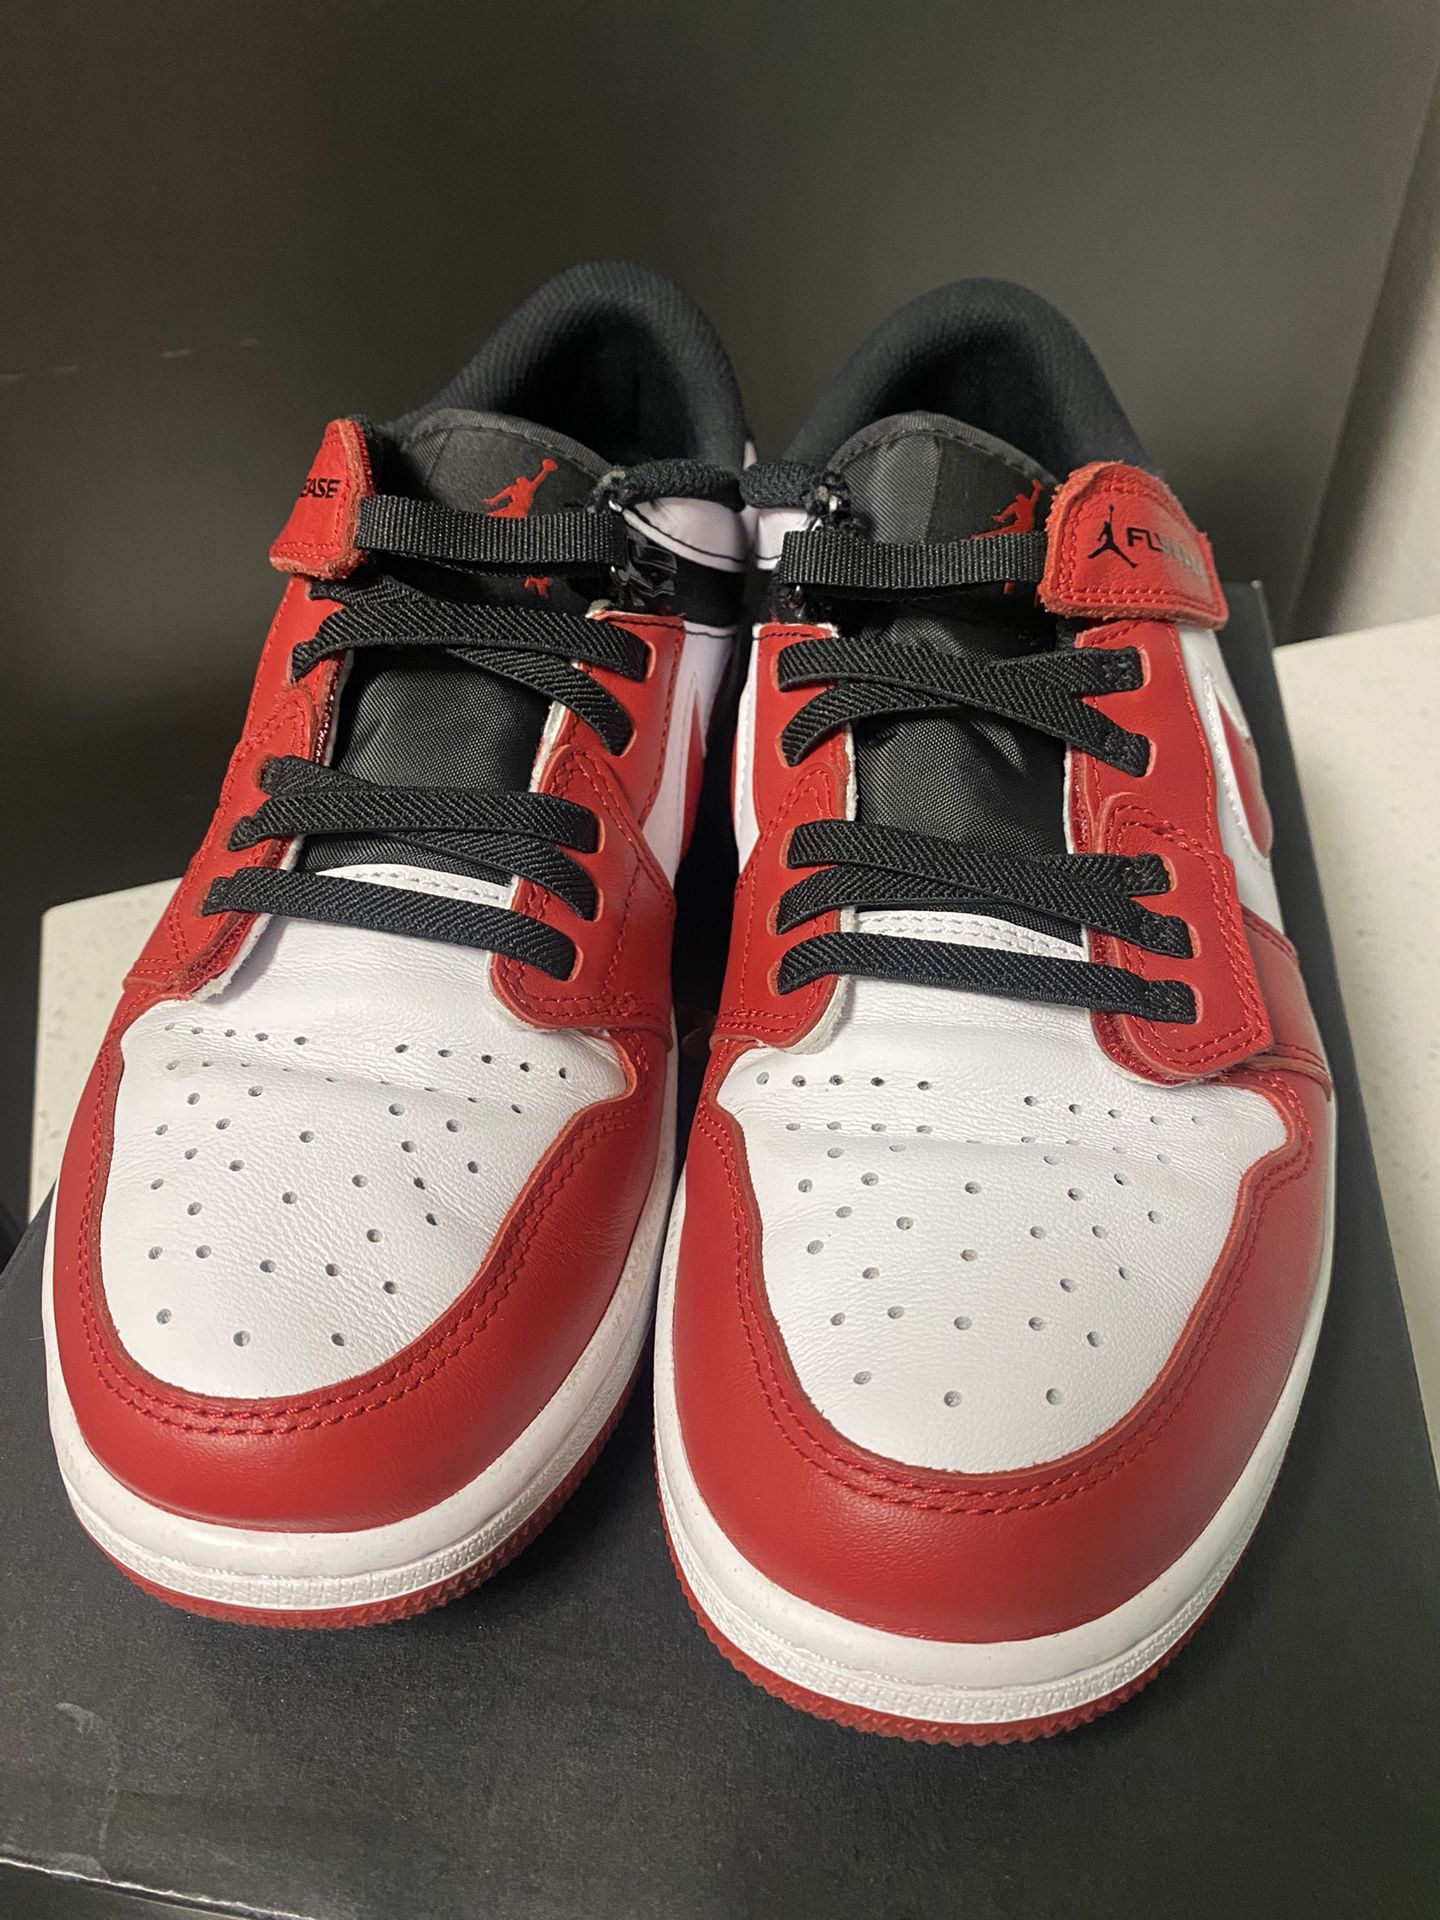 Nike Jordan 1 Low Fly ease Gym Red (Mens 9.5) 